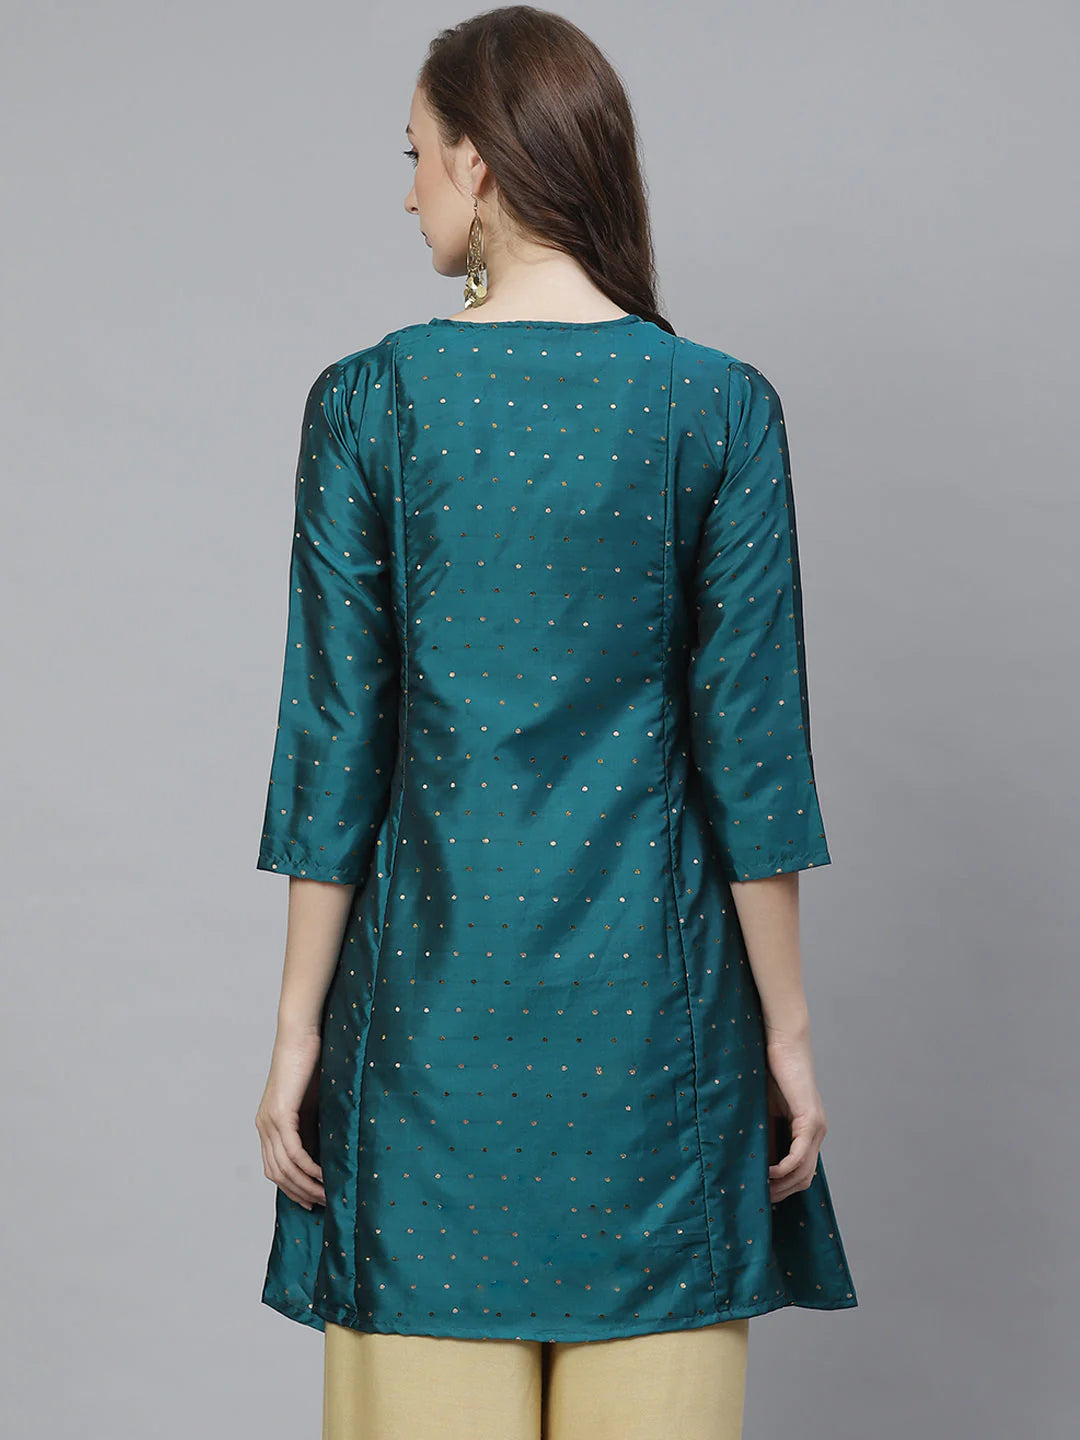 Women's Couure Green Ethnic Tunic - Bhama Couture USA